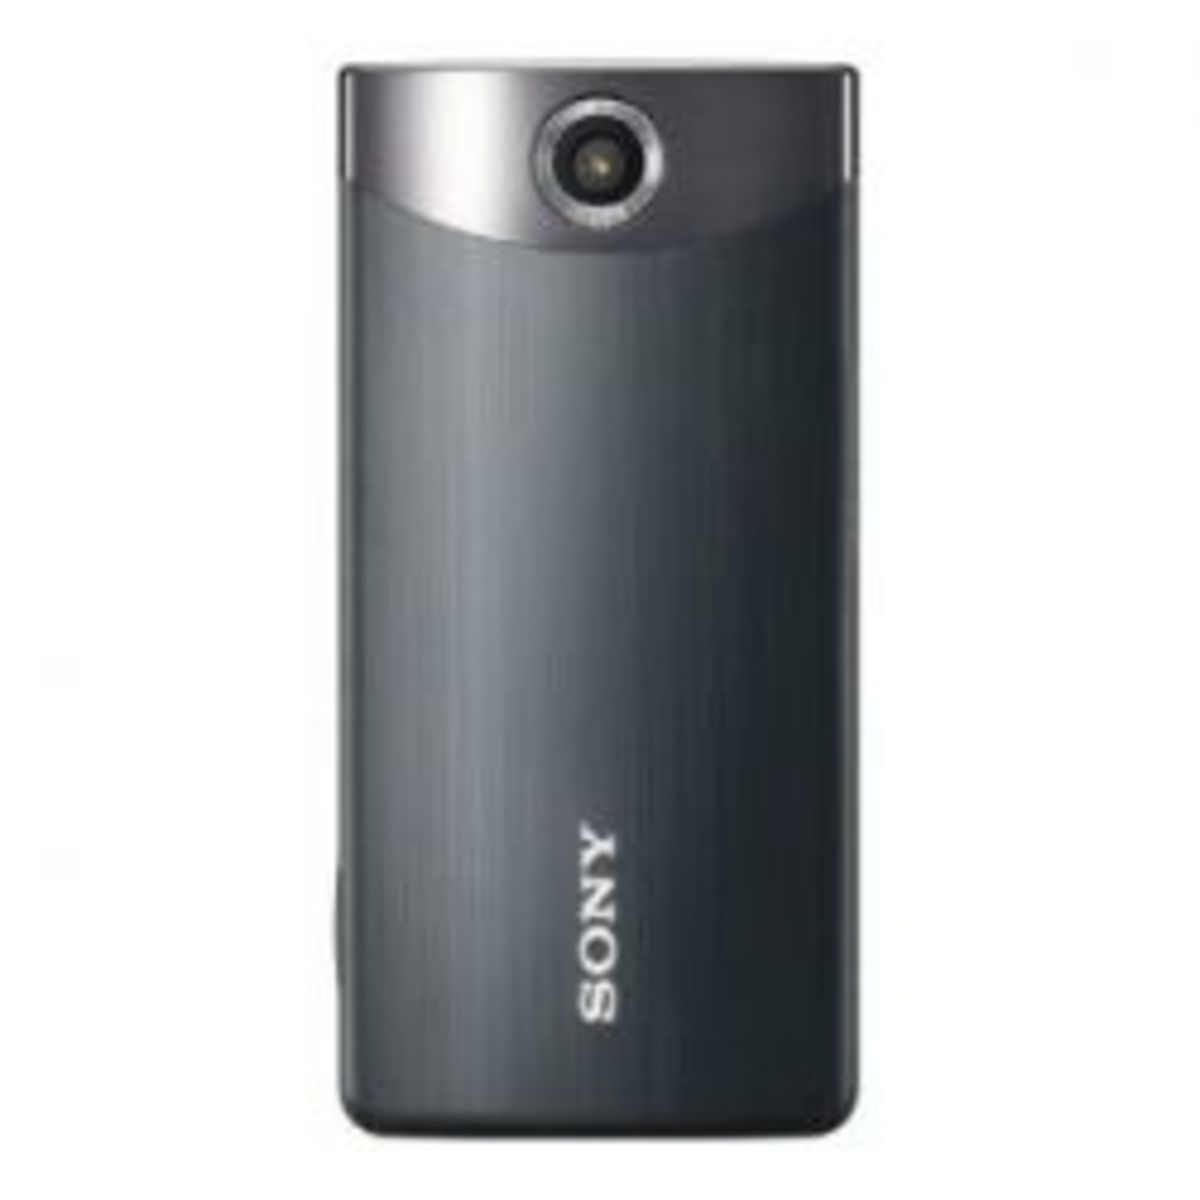 Sony Bloggie Touch Camcorder